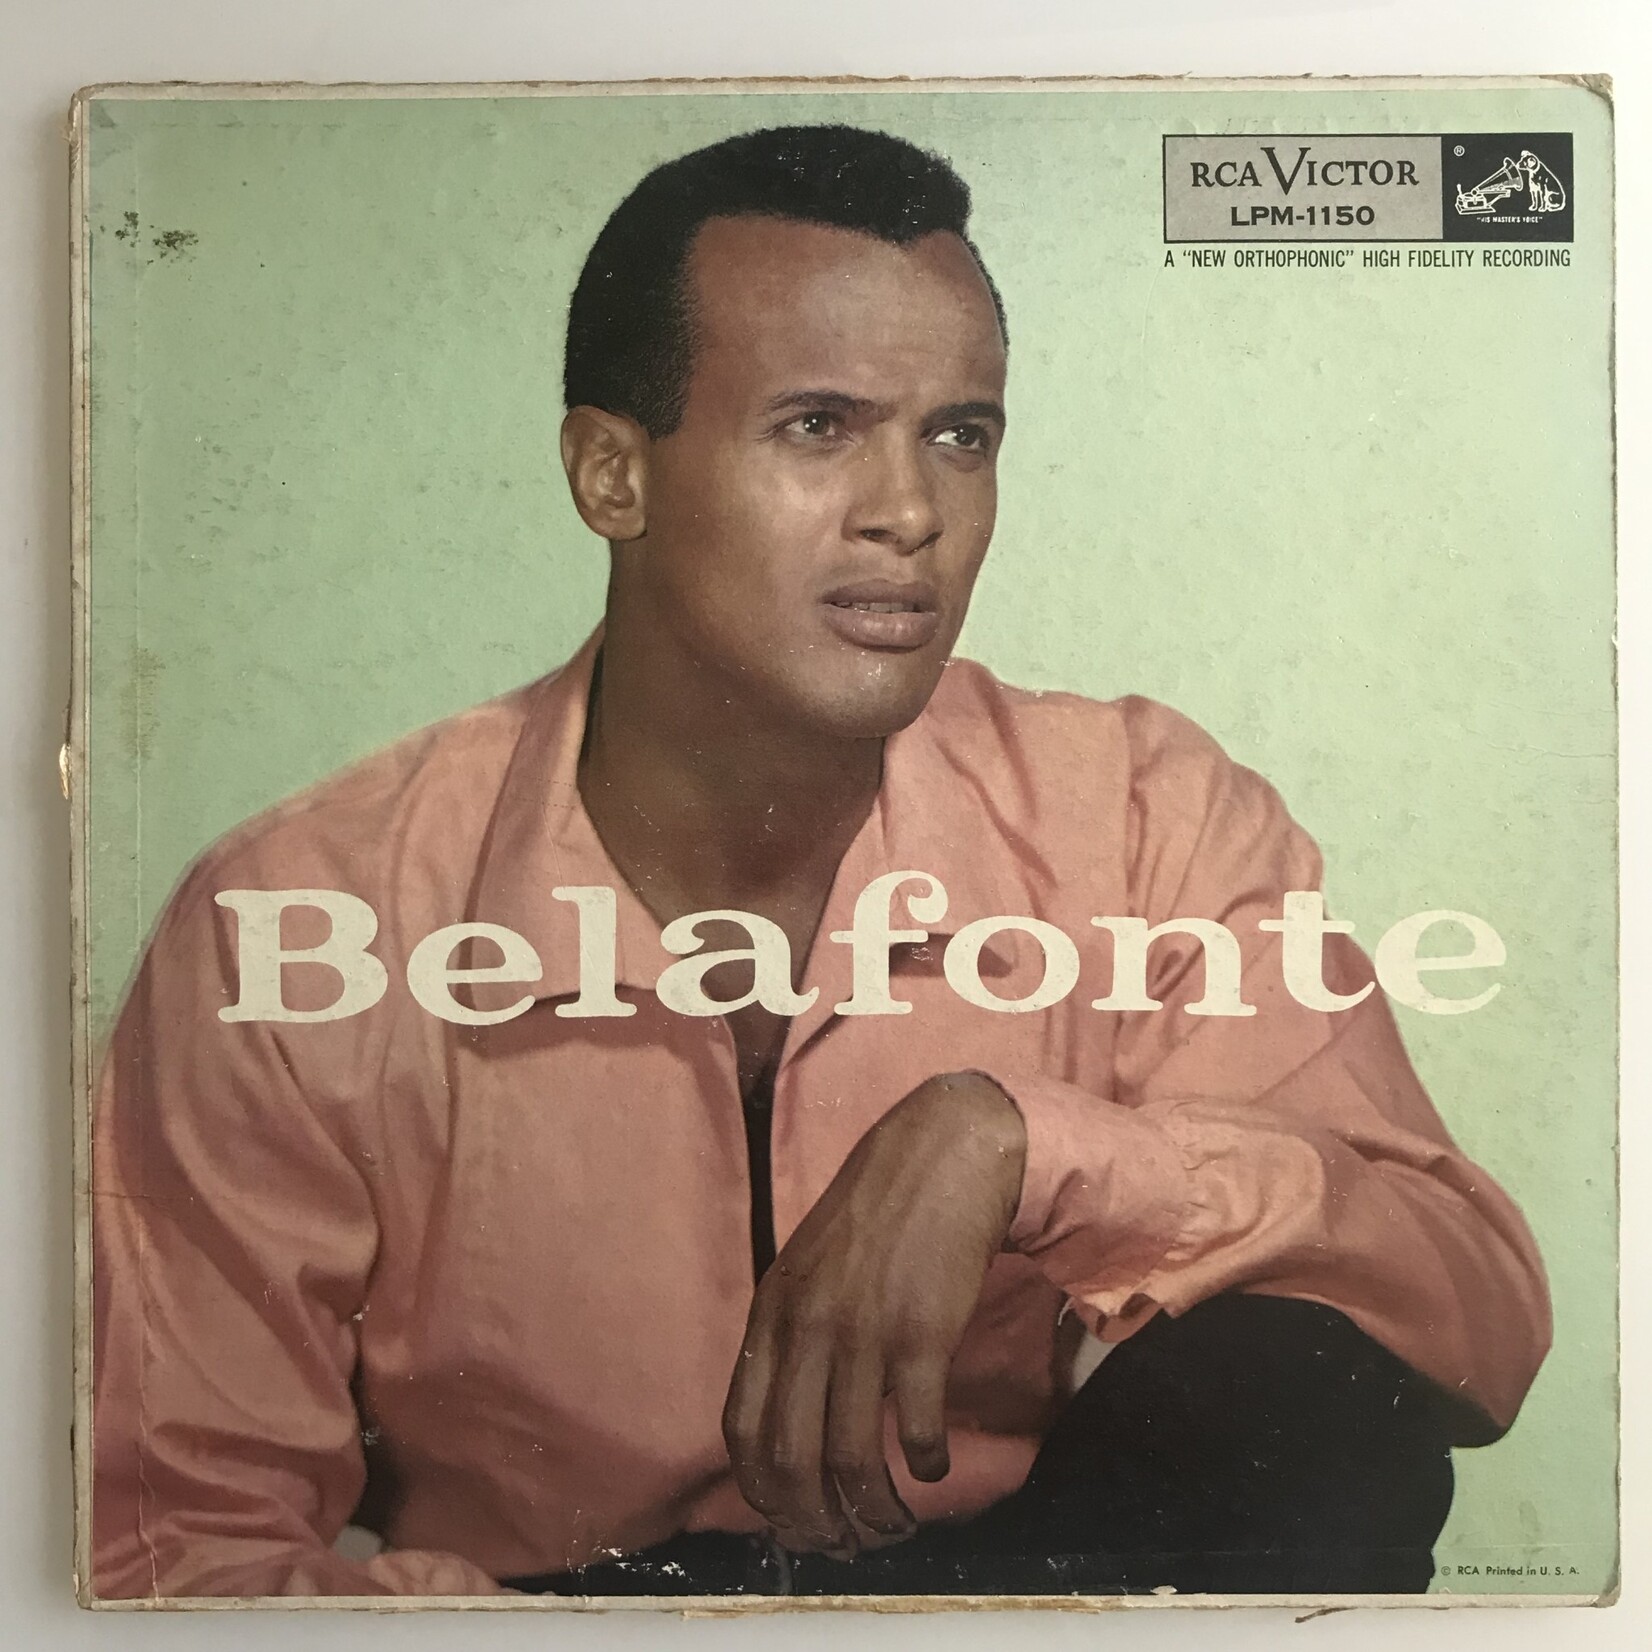 Harry Belafonte - Belafonte - Vinyl LP (USED)